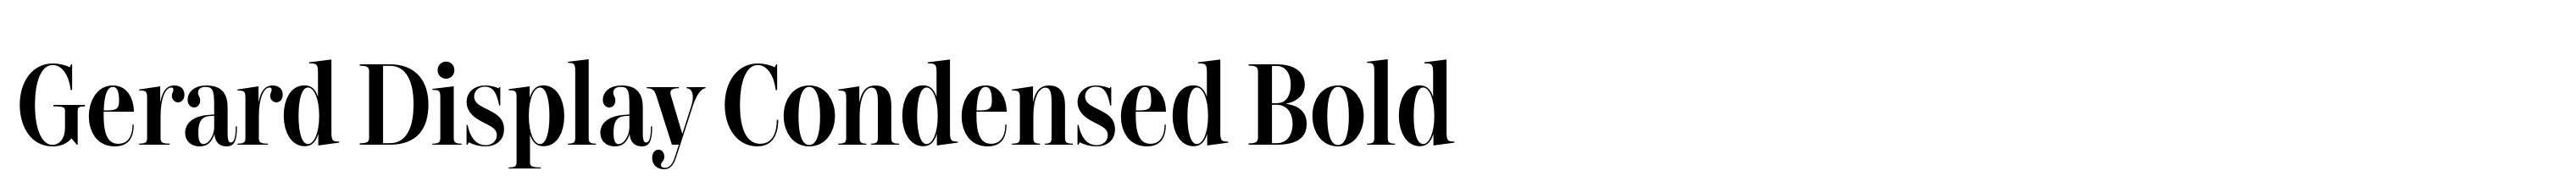 Gerard Display Condensed Bold